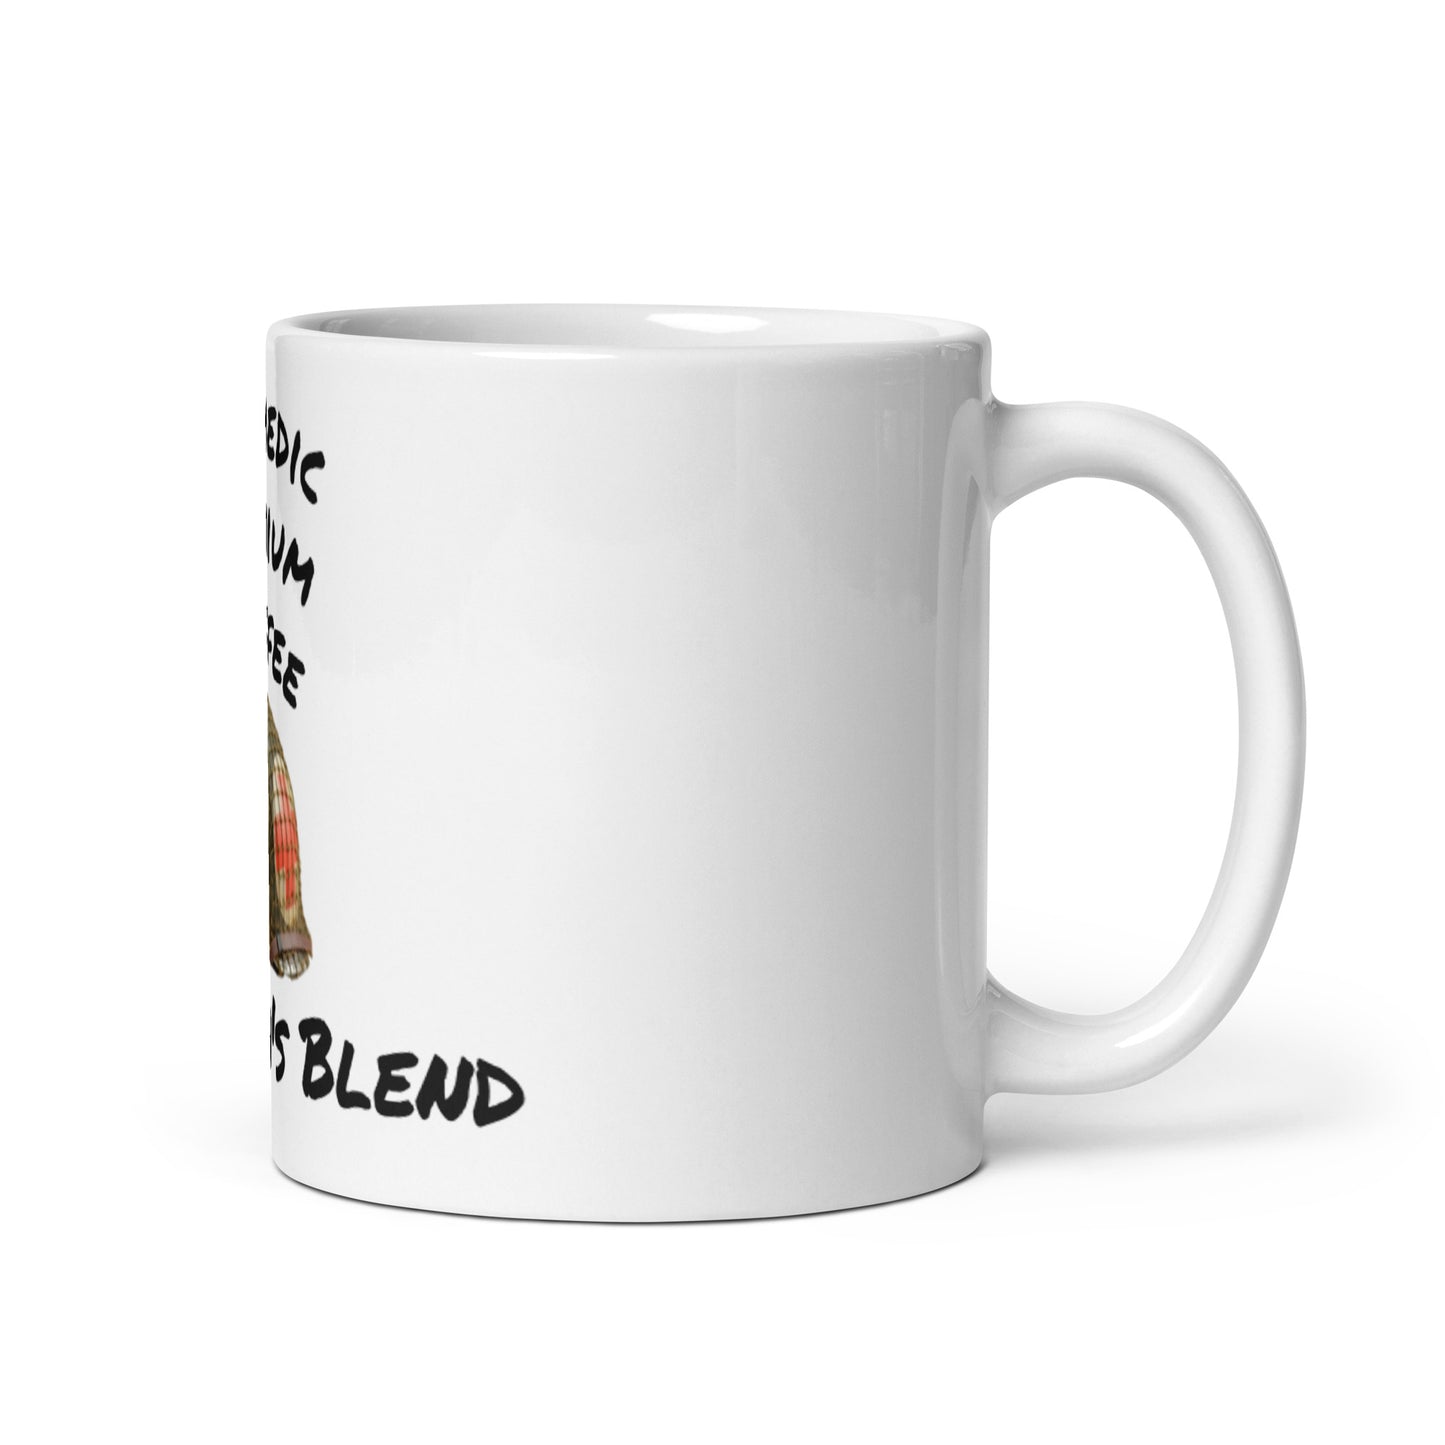 McGrath's Blend Coffee Cup